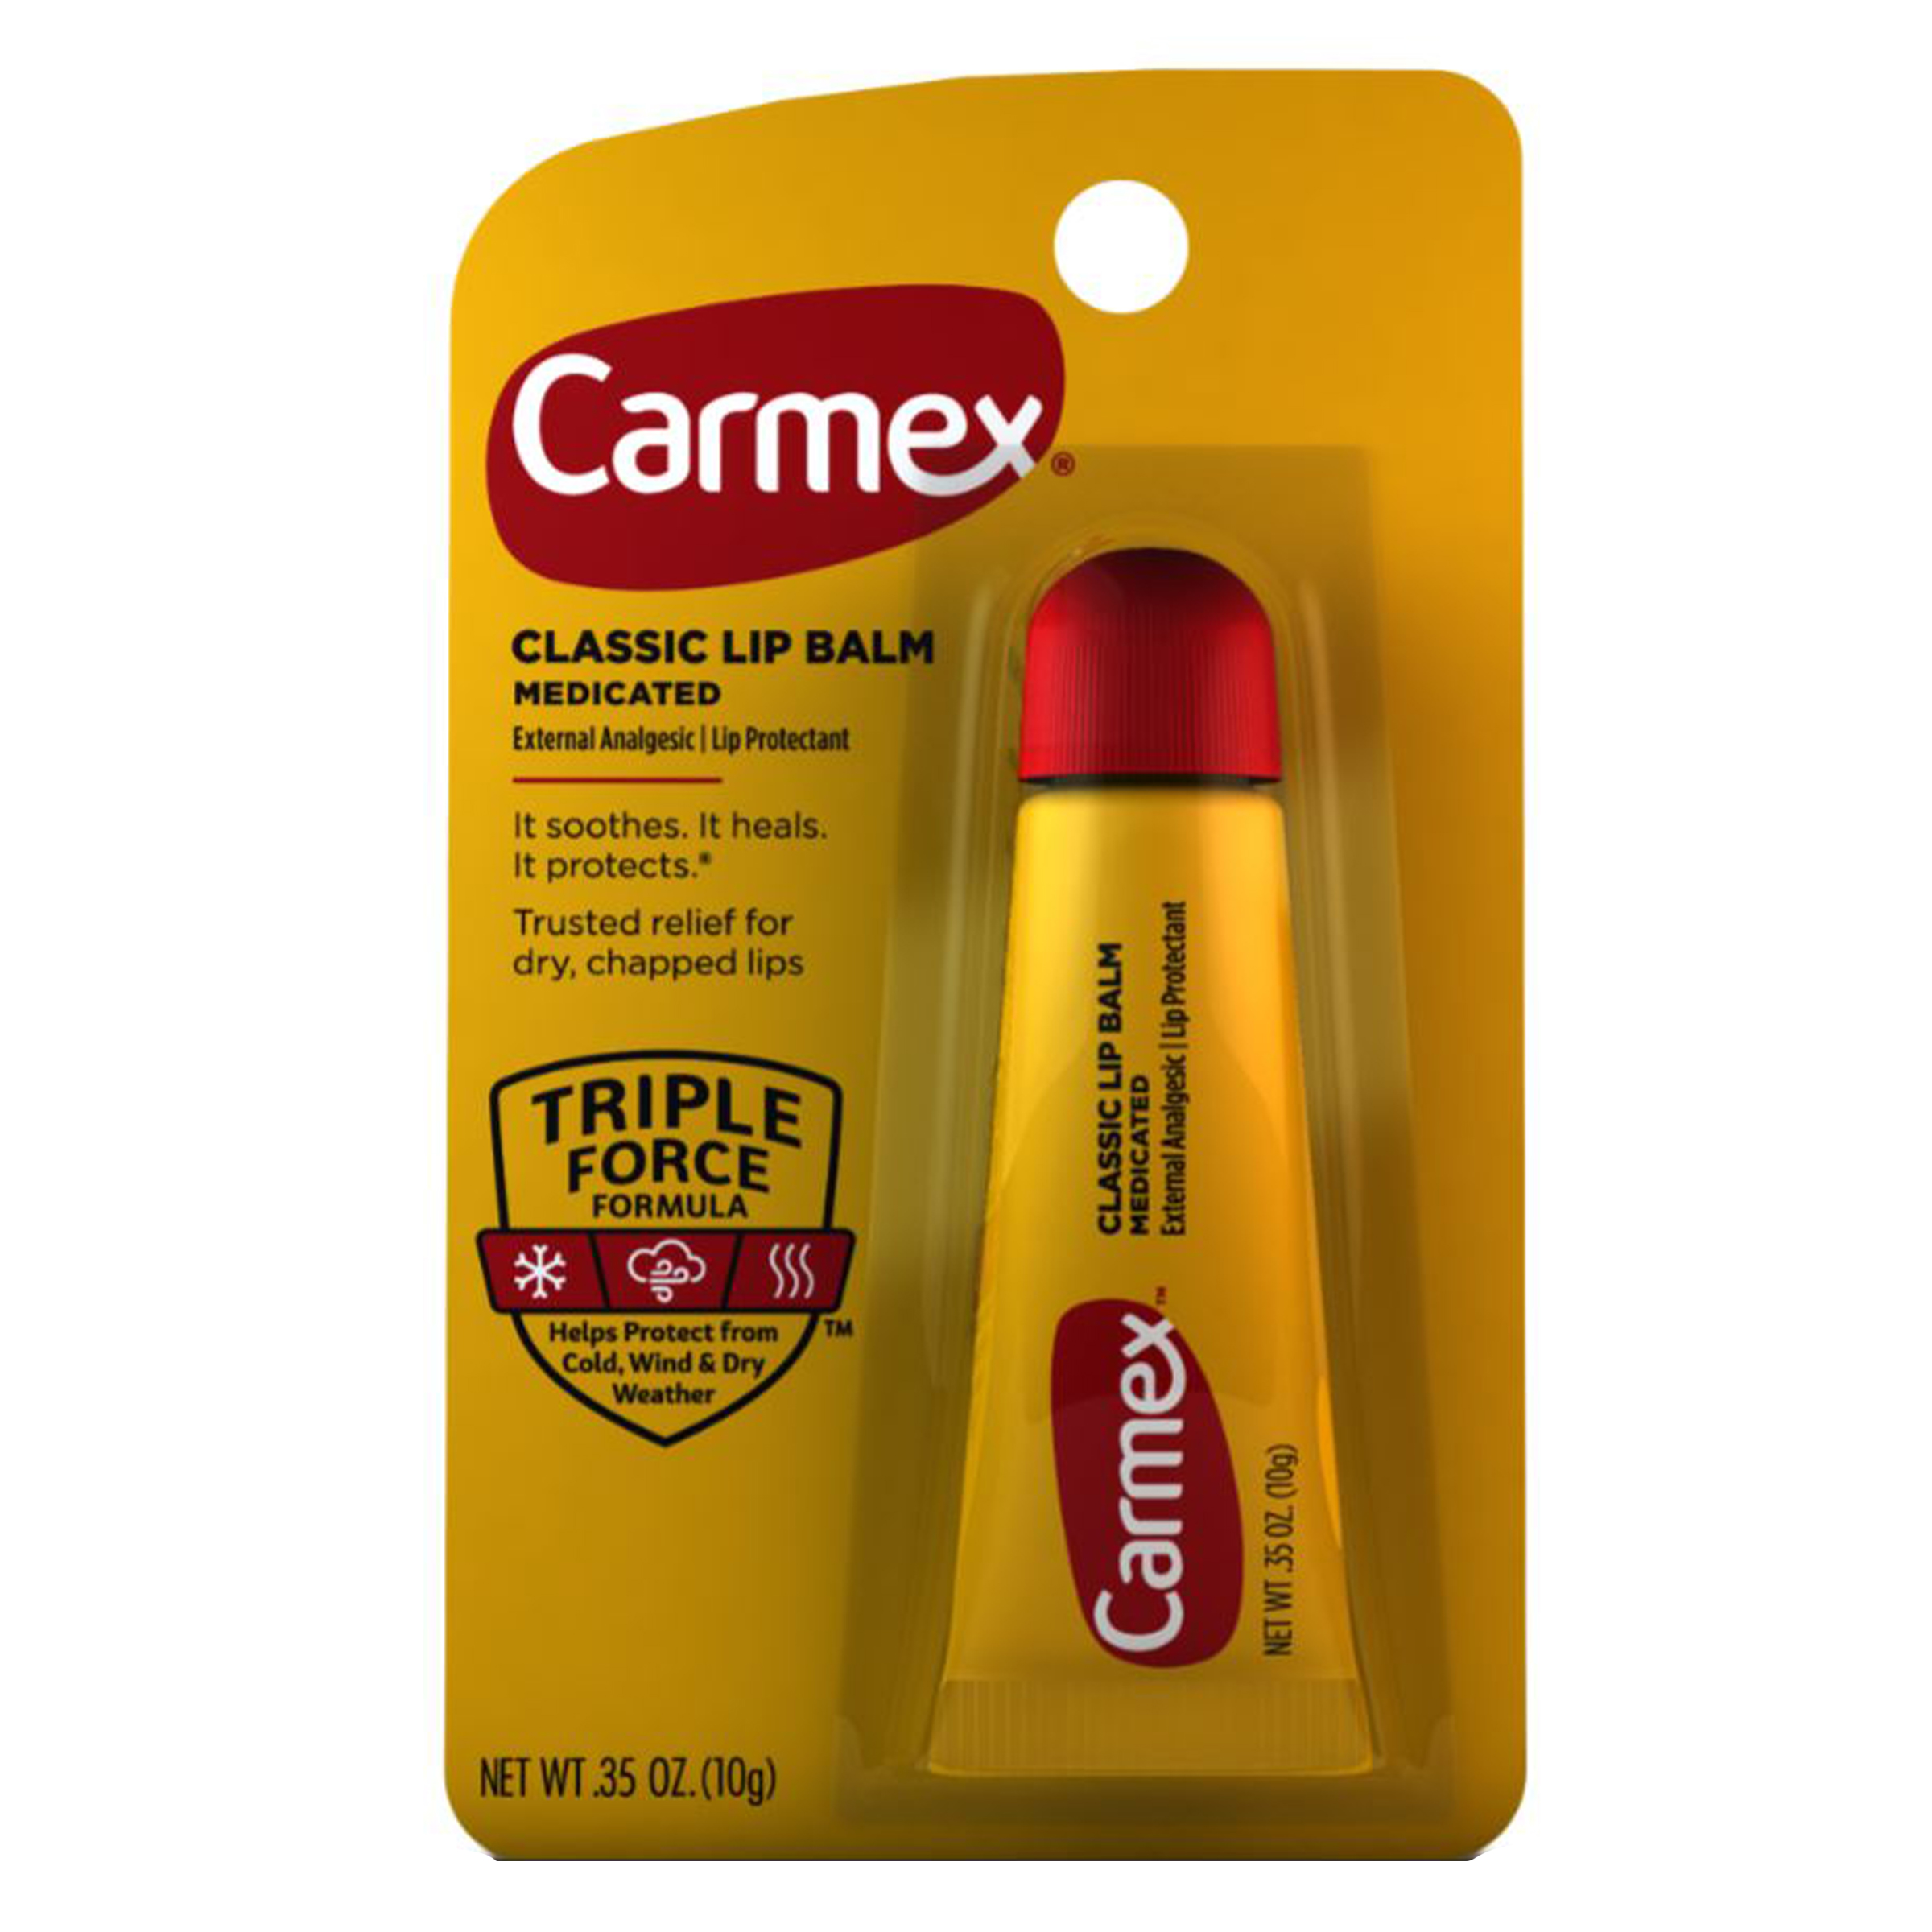 Carmex Classic Medicated Lip Balm Tube, Lip Moisturizer, 1 Count - image 5 of 11